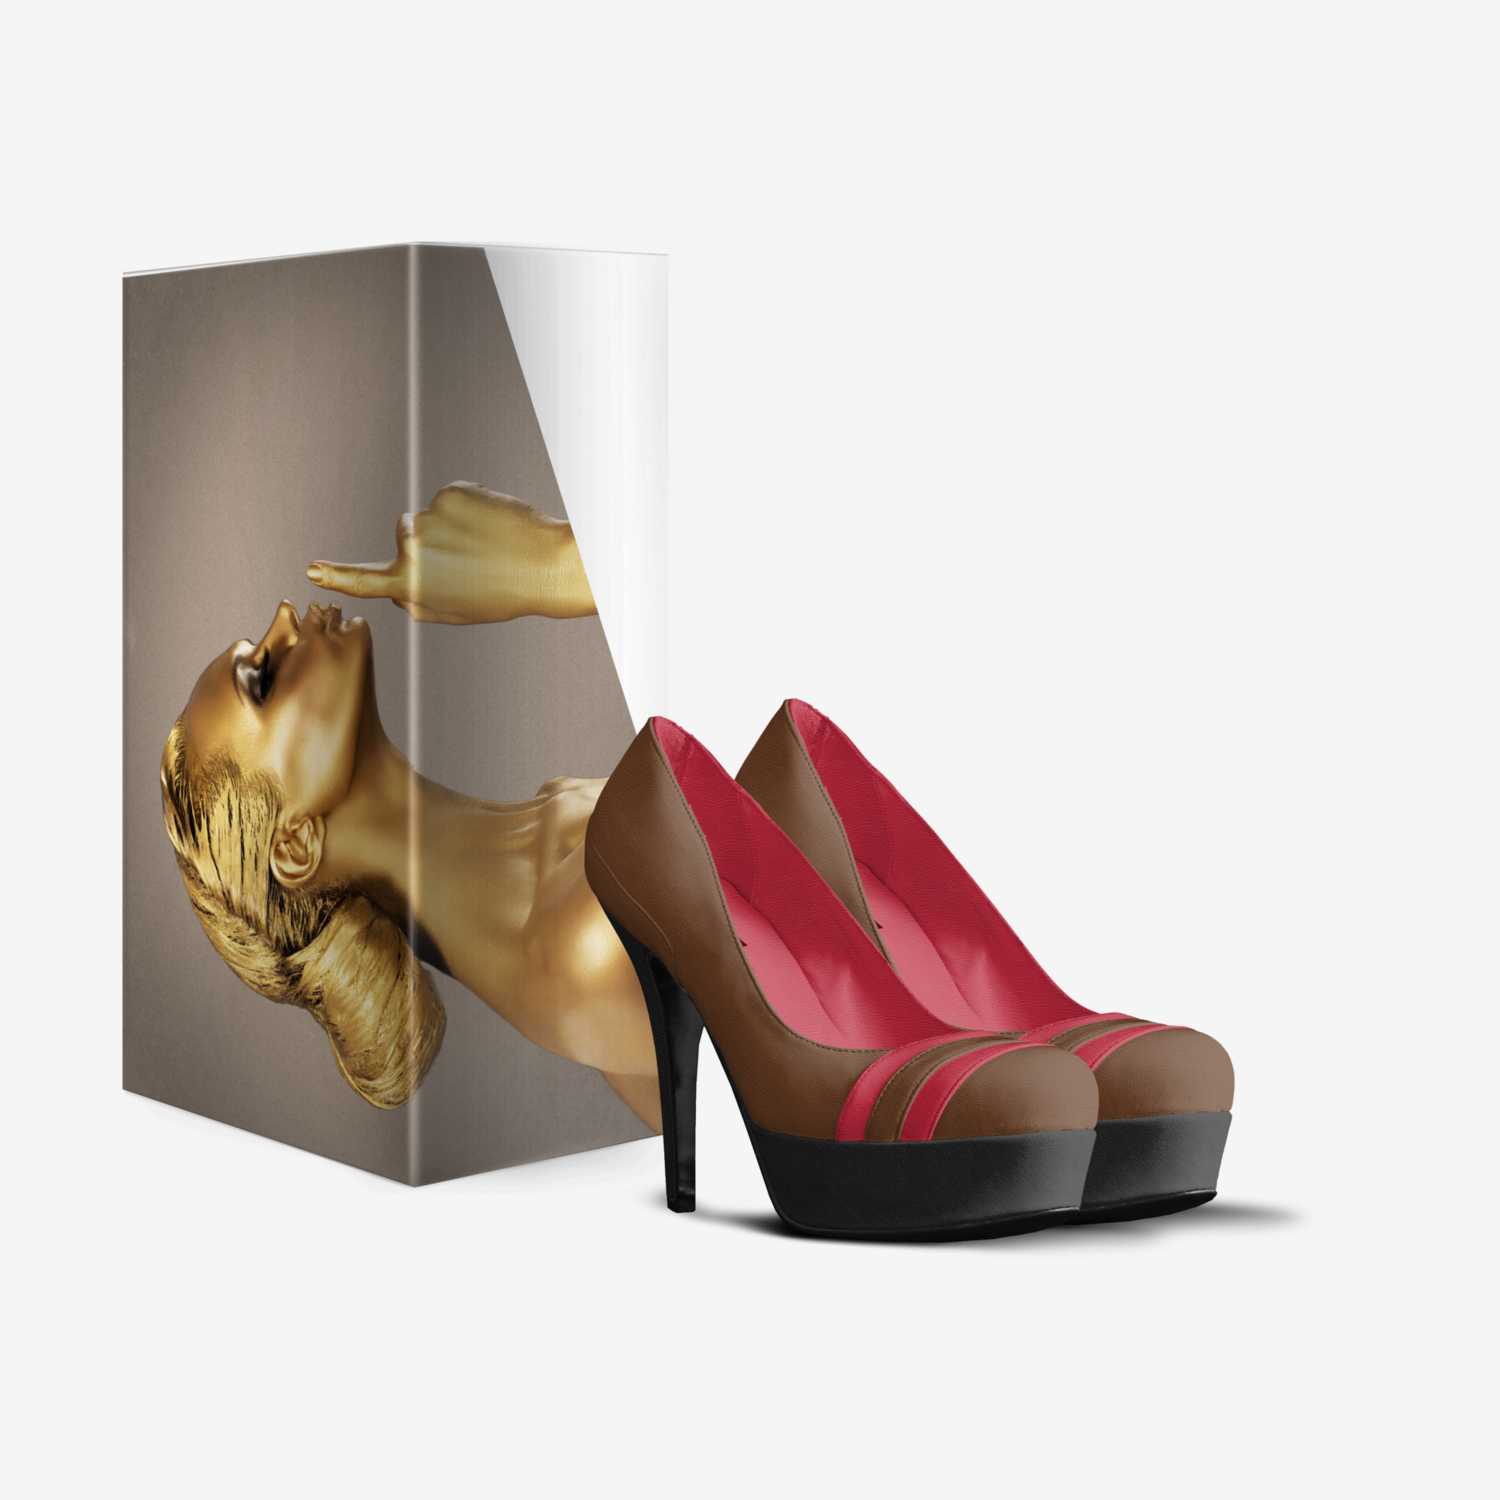 Вікуся custom made in Italy shoes by Law Alain | Box view